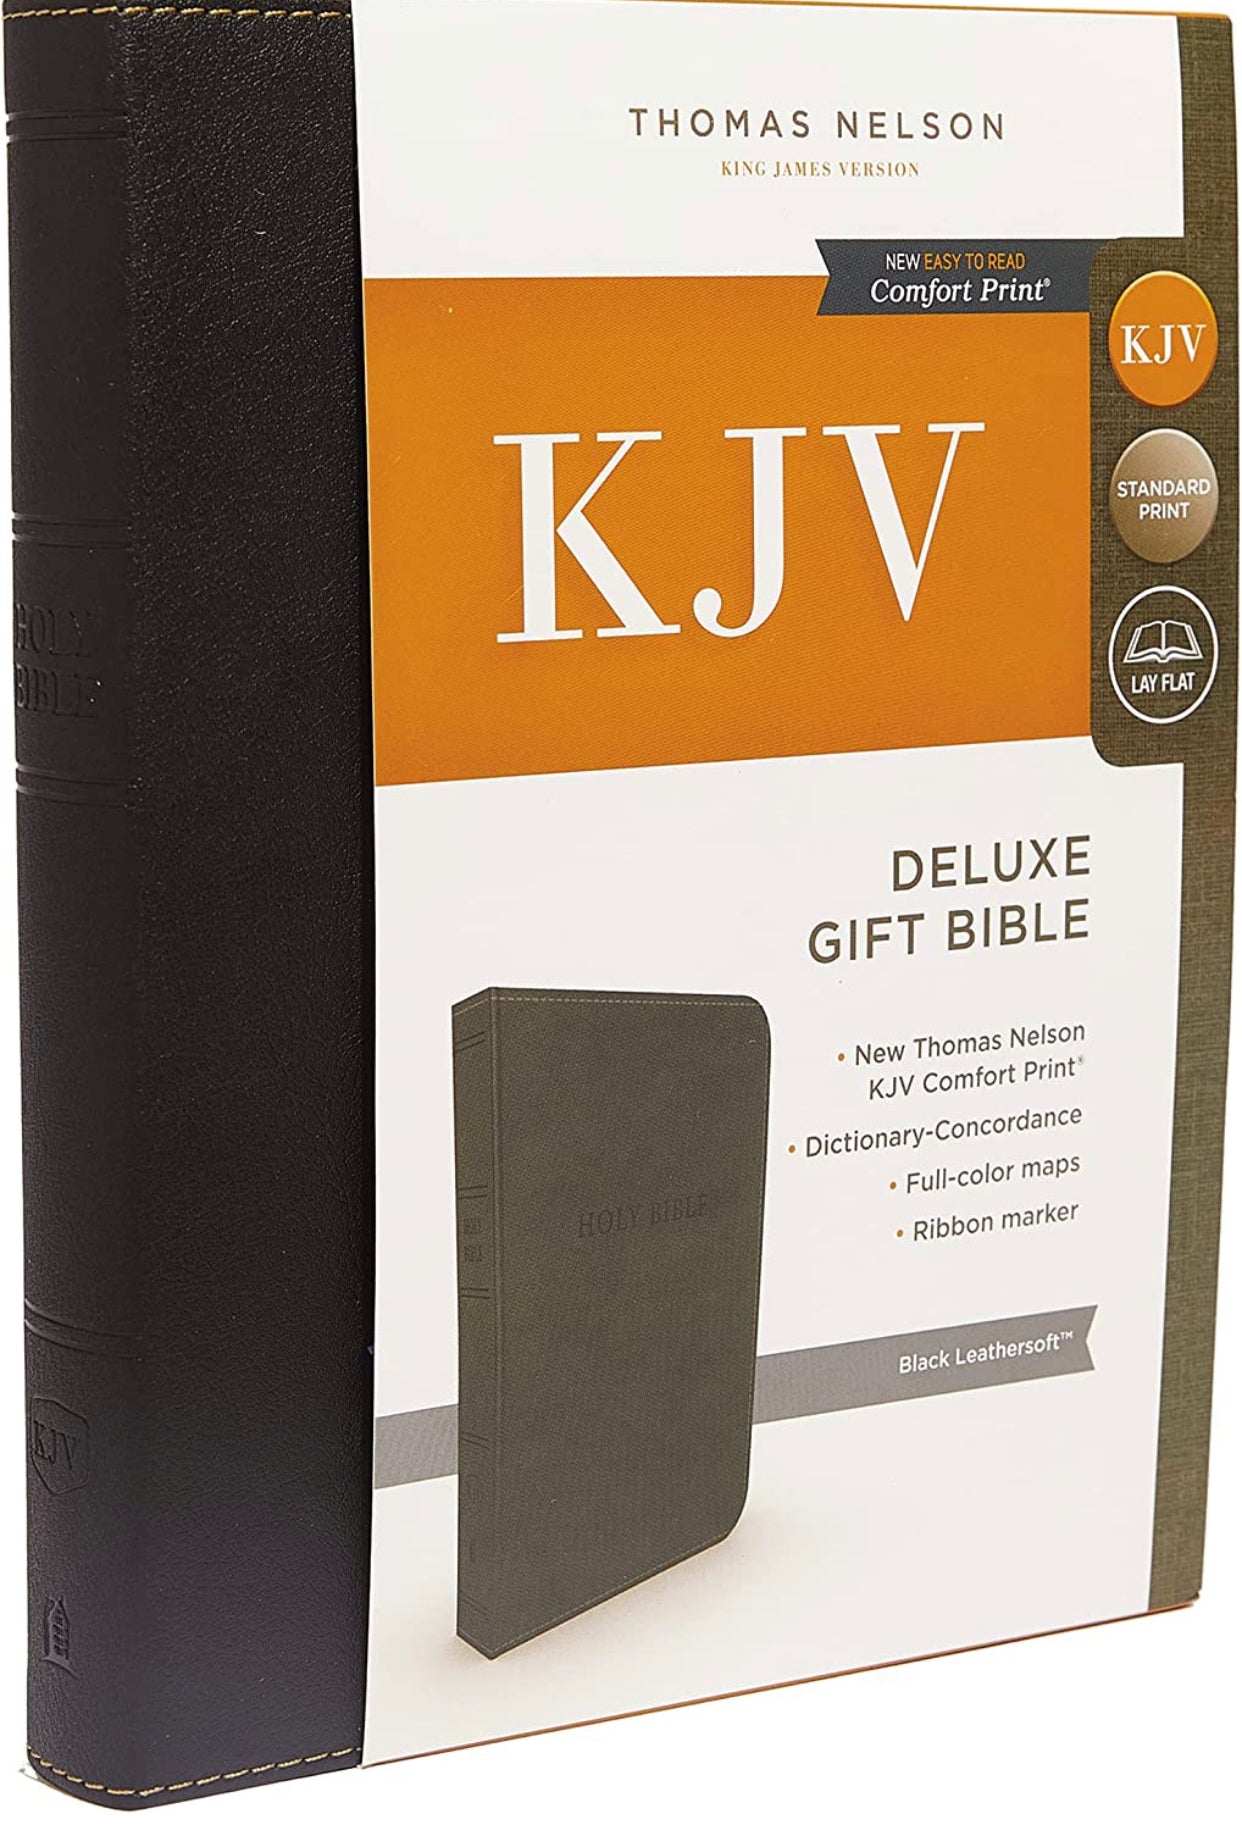 KJV, Deluxe Gift Bible, Red Letter Edition, Comfort Print: Holy Bible, King James Version